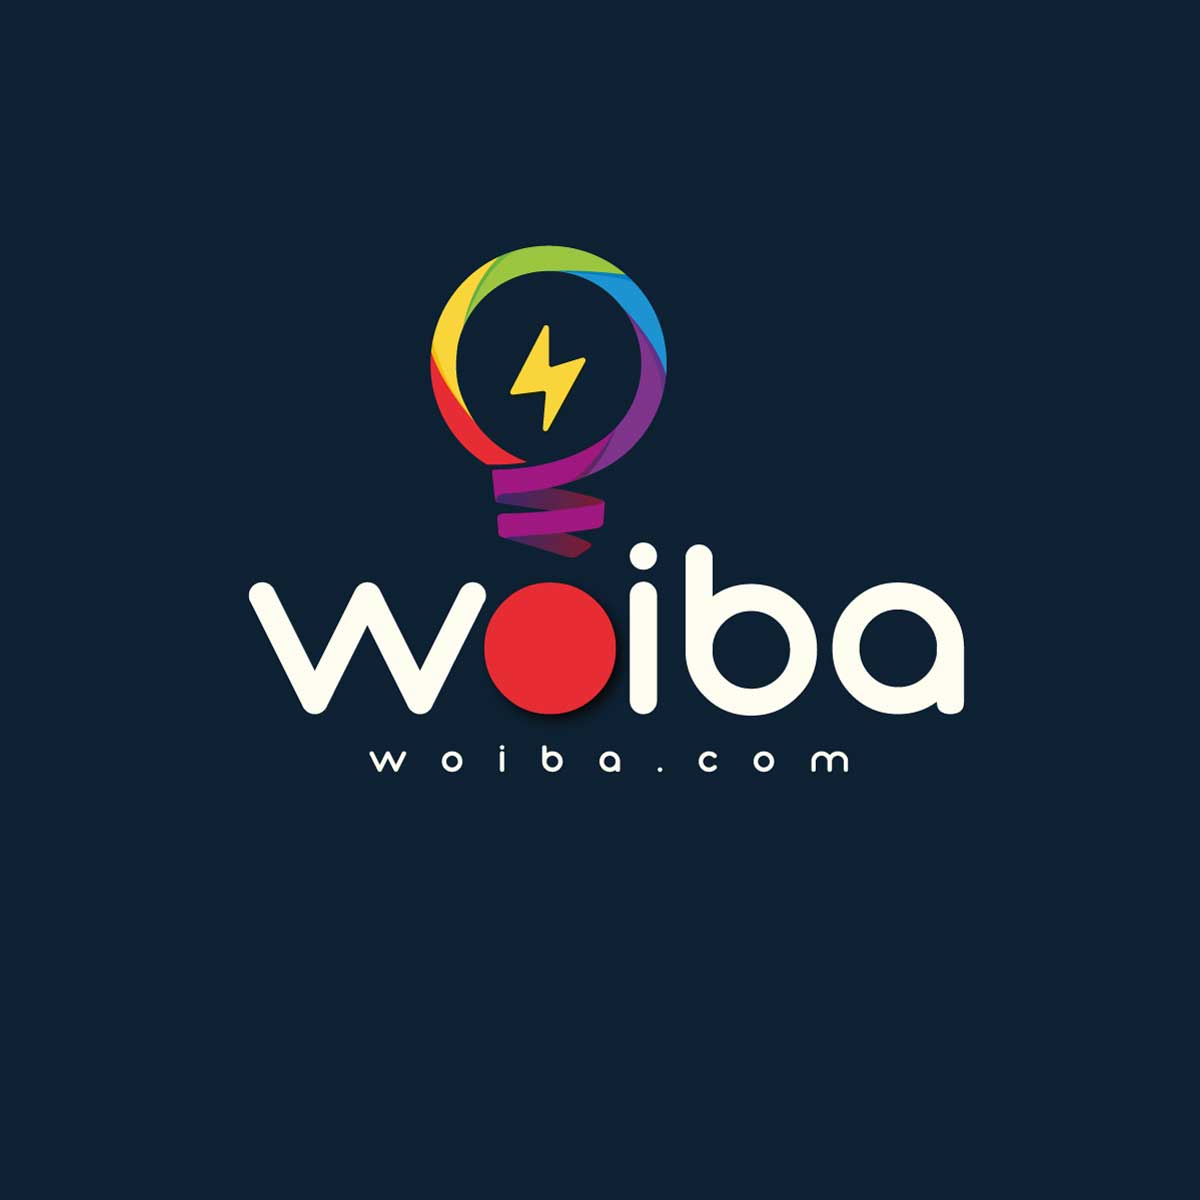 woiba.com - Branding design by Brandizle